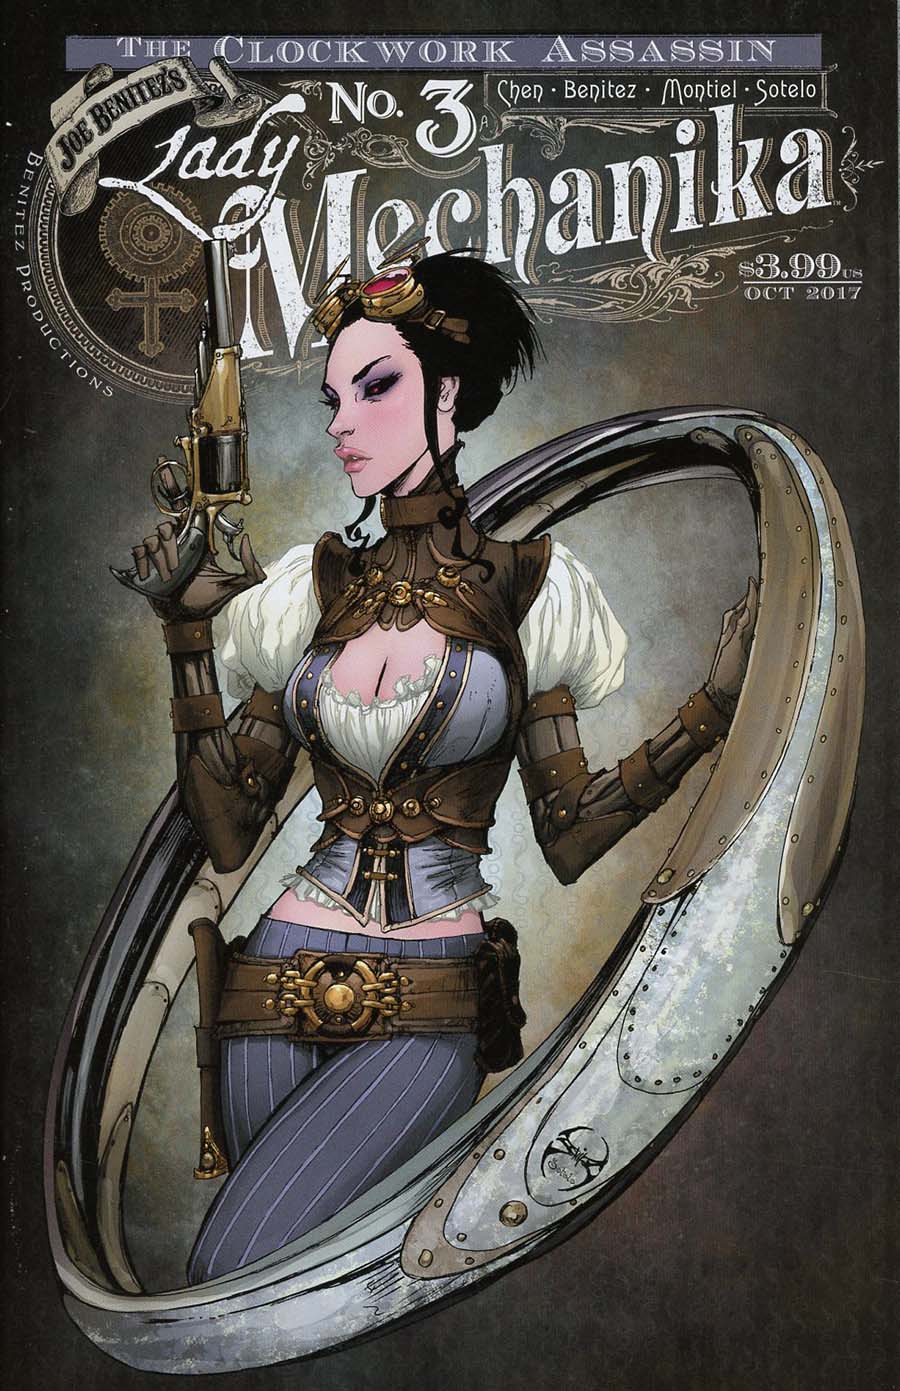 Lady Mechanika Clockwork Assassin #3 Cover A Regular Joe Benitez & Beth Sotelo Cover